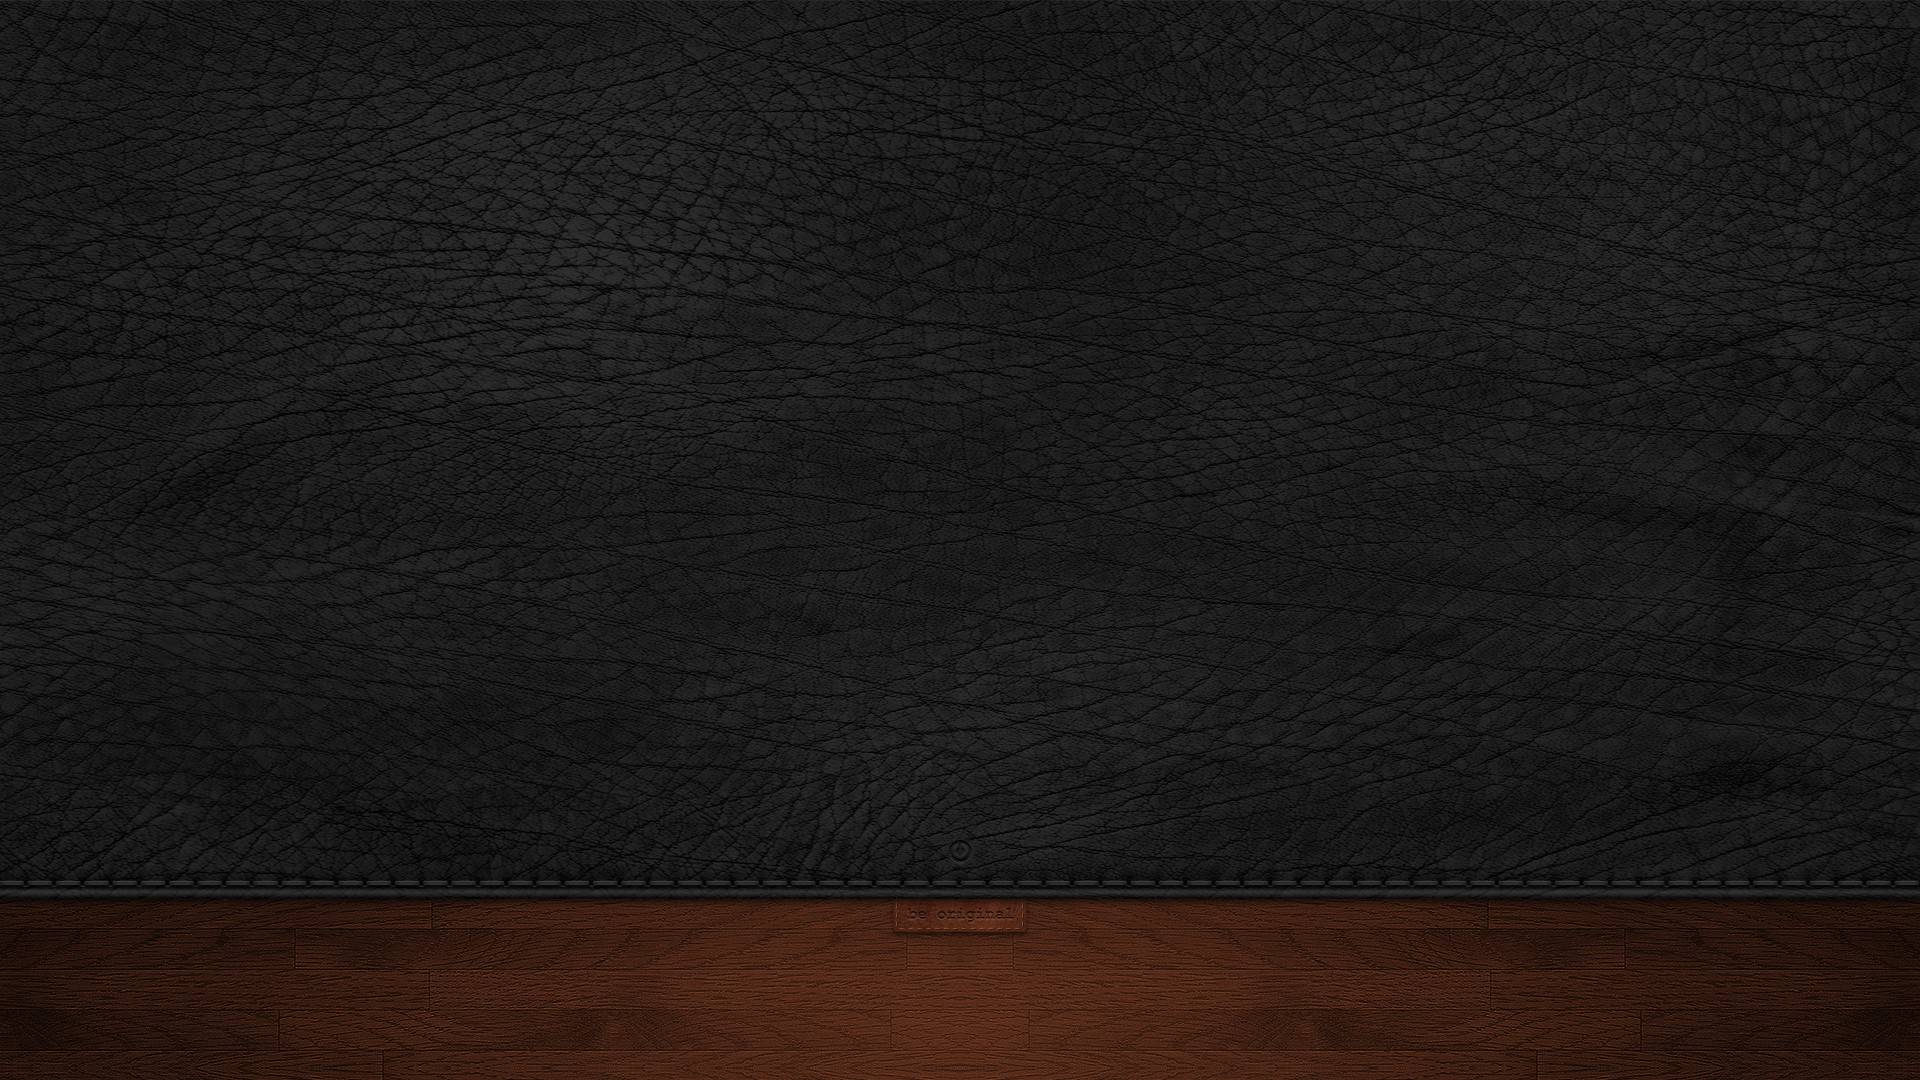 Wallpaper.wiki Black Wood Wallpaper Black Leather Texture More